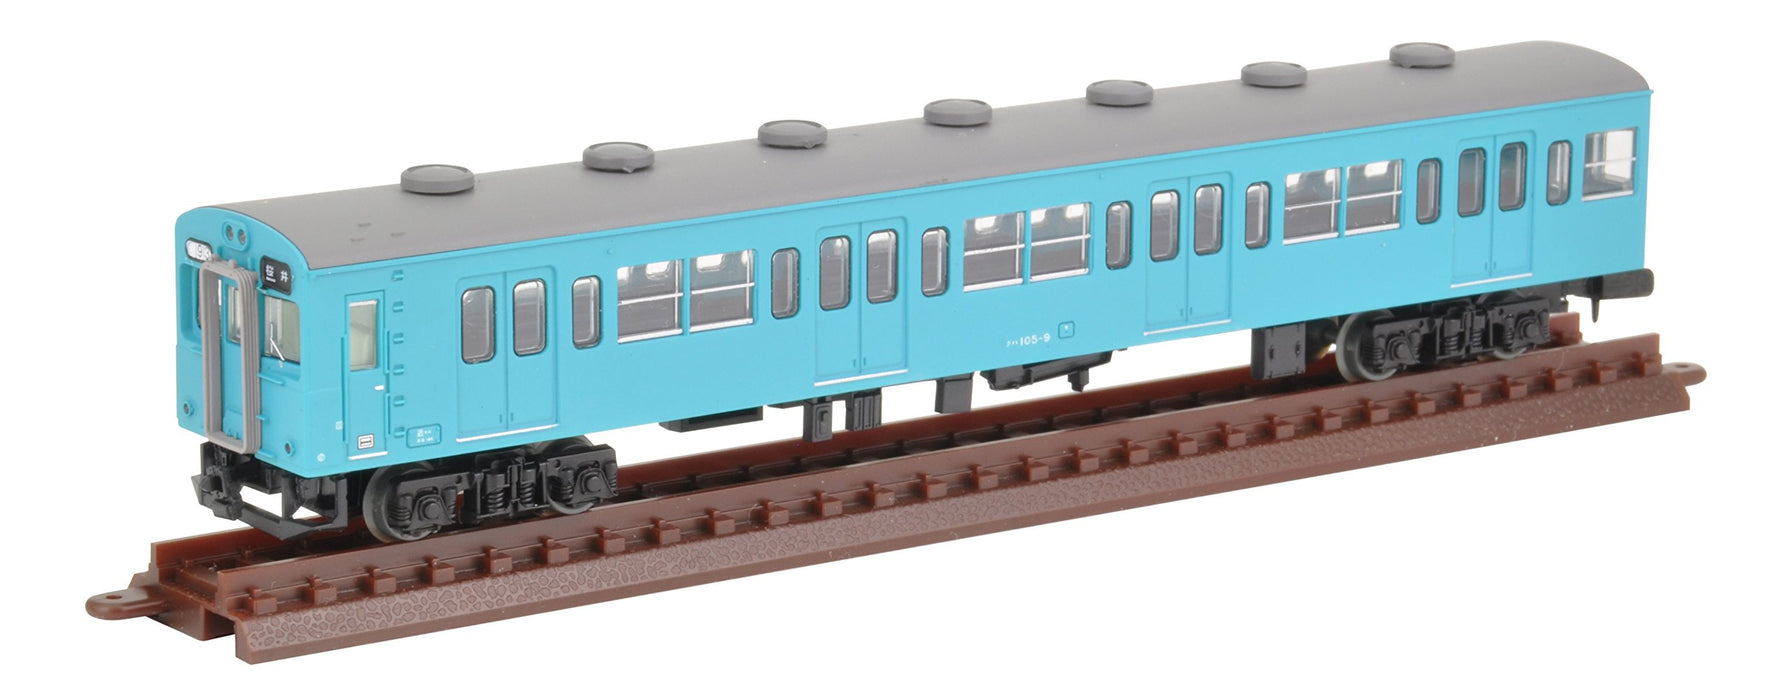 Tomytec JR105 Sakurai/Wakayama 2-Car Set Blue Railway Collection Diorama